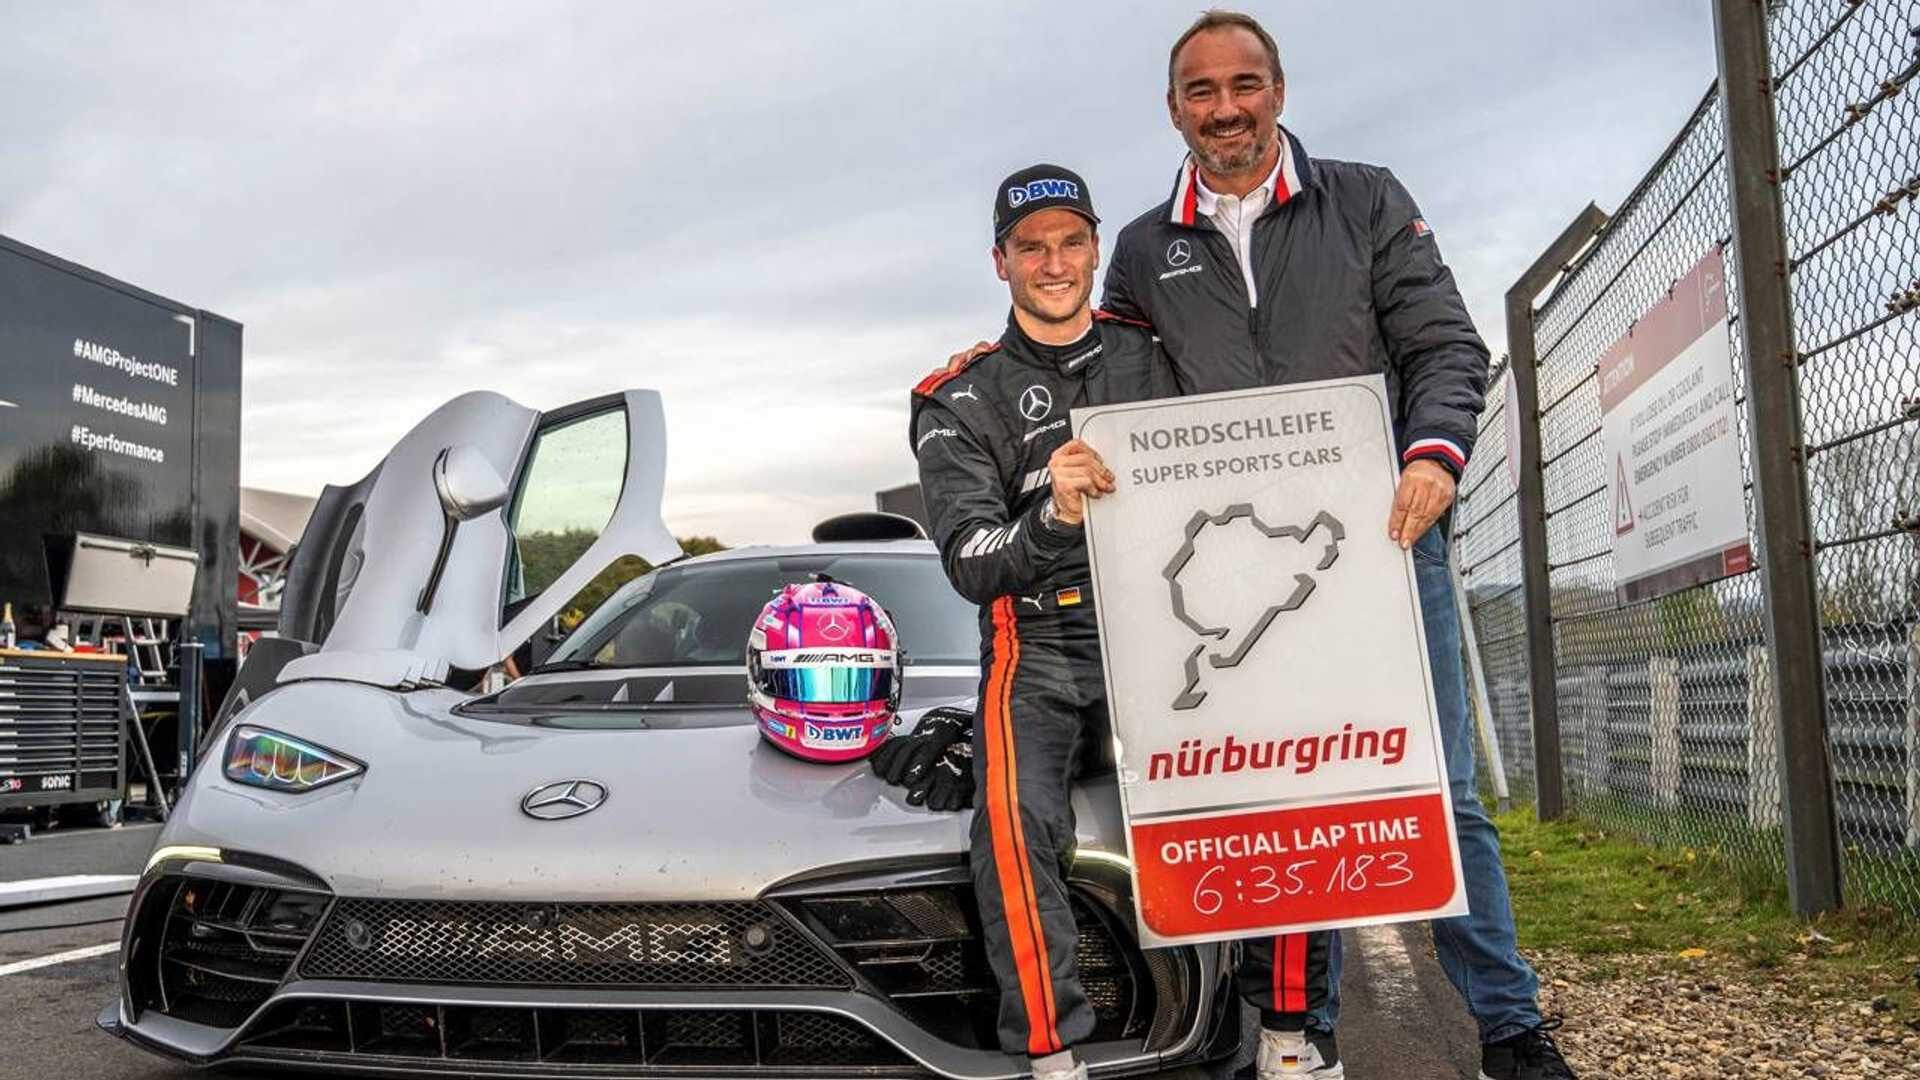 Engel ma nowy rekord na torze Nurburgring - 6:35.183!